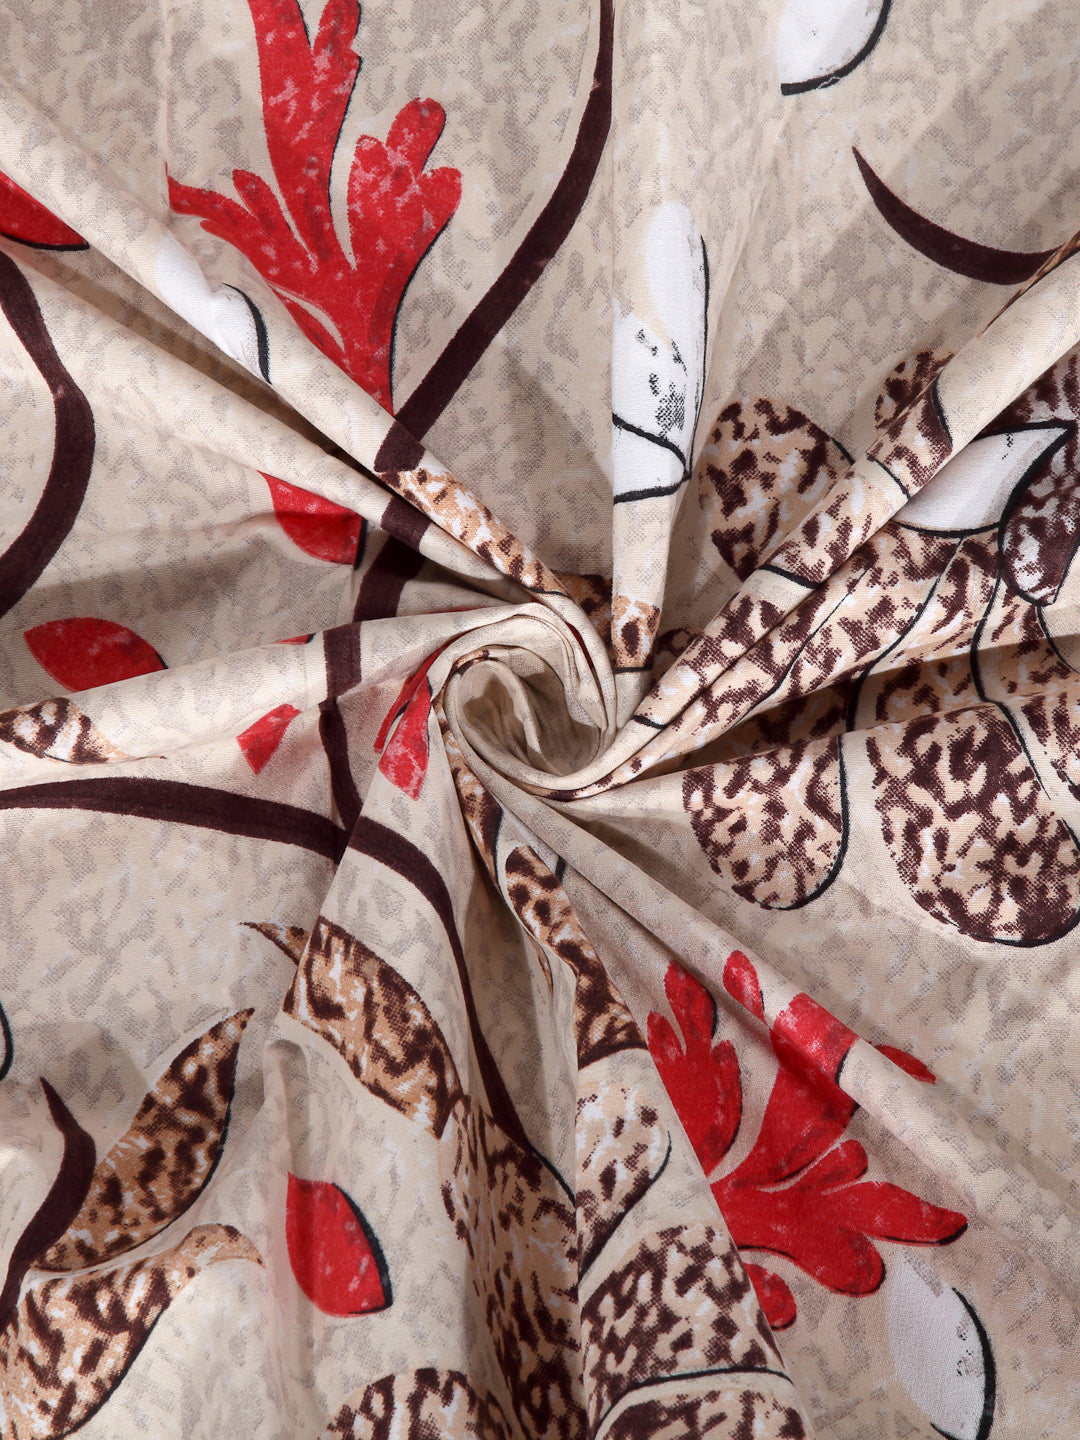 Arrabi Brown Floral TC Cotton Blend Double Size Bedsheet with 2 Pillow Cover